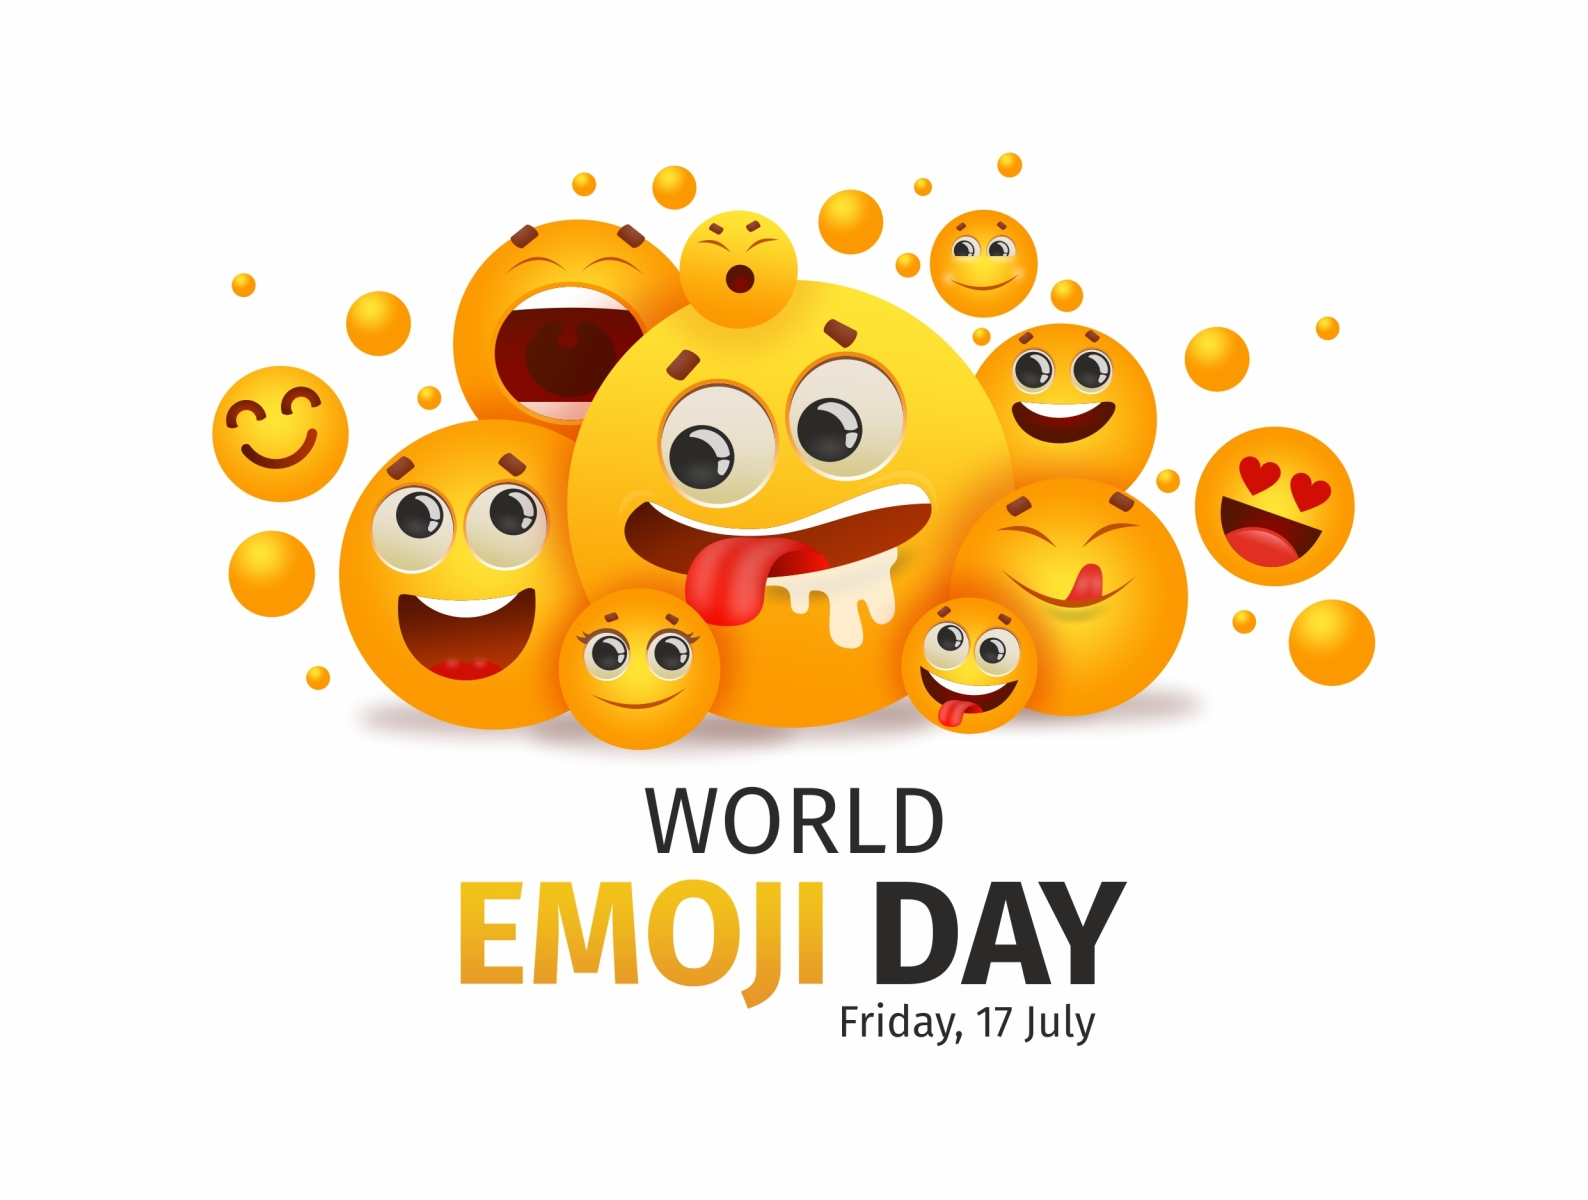 World Emoji Day by Ramola on Dribbble